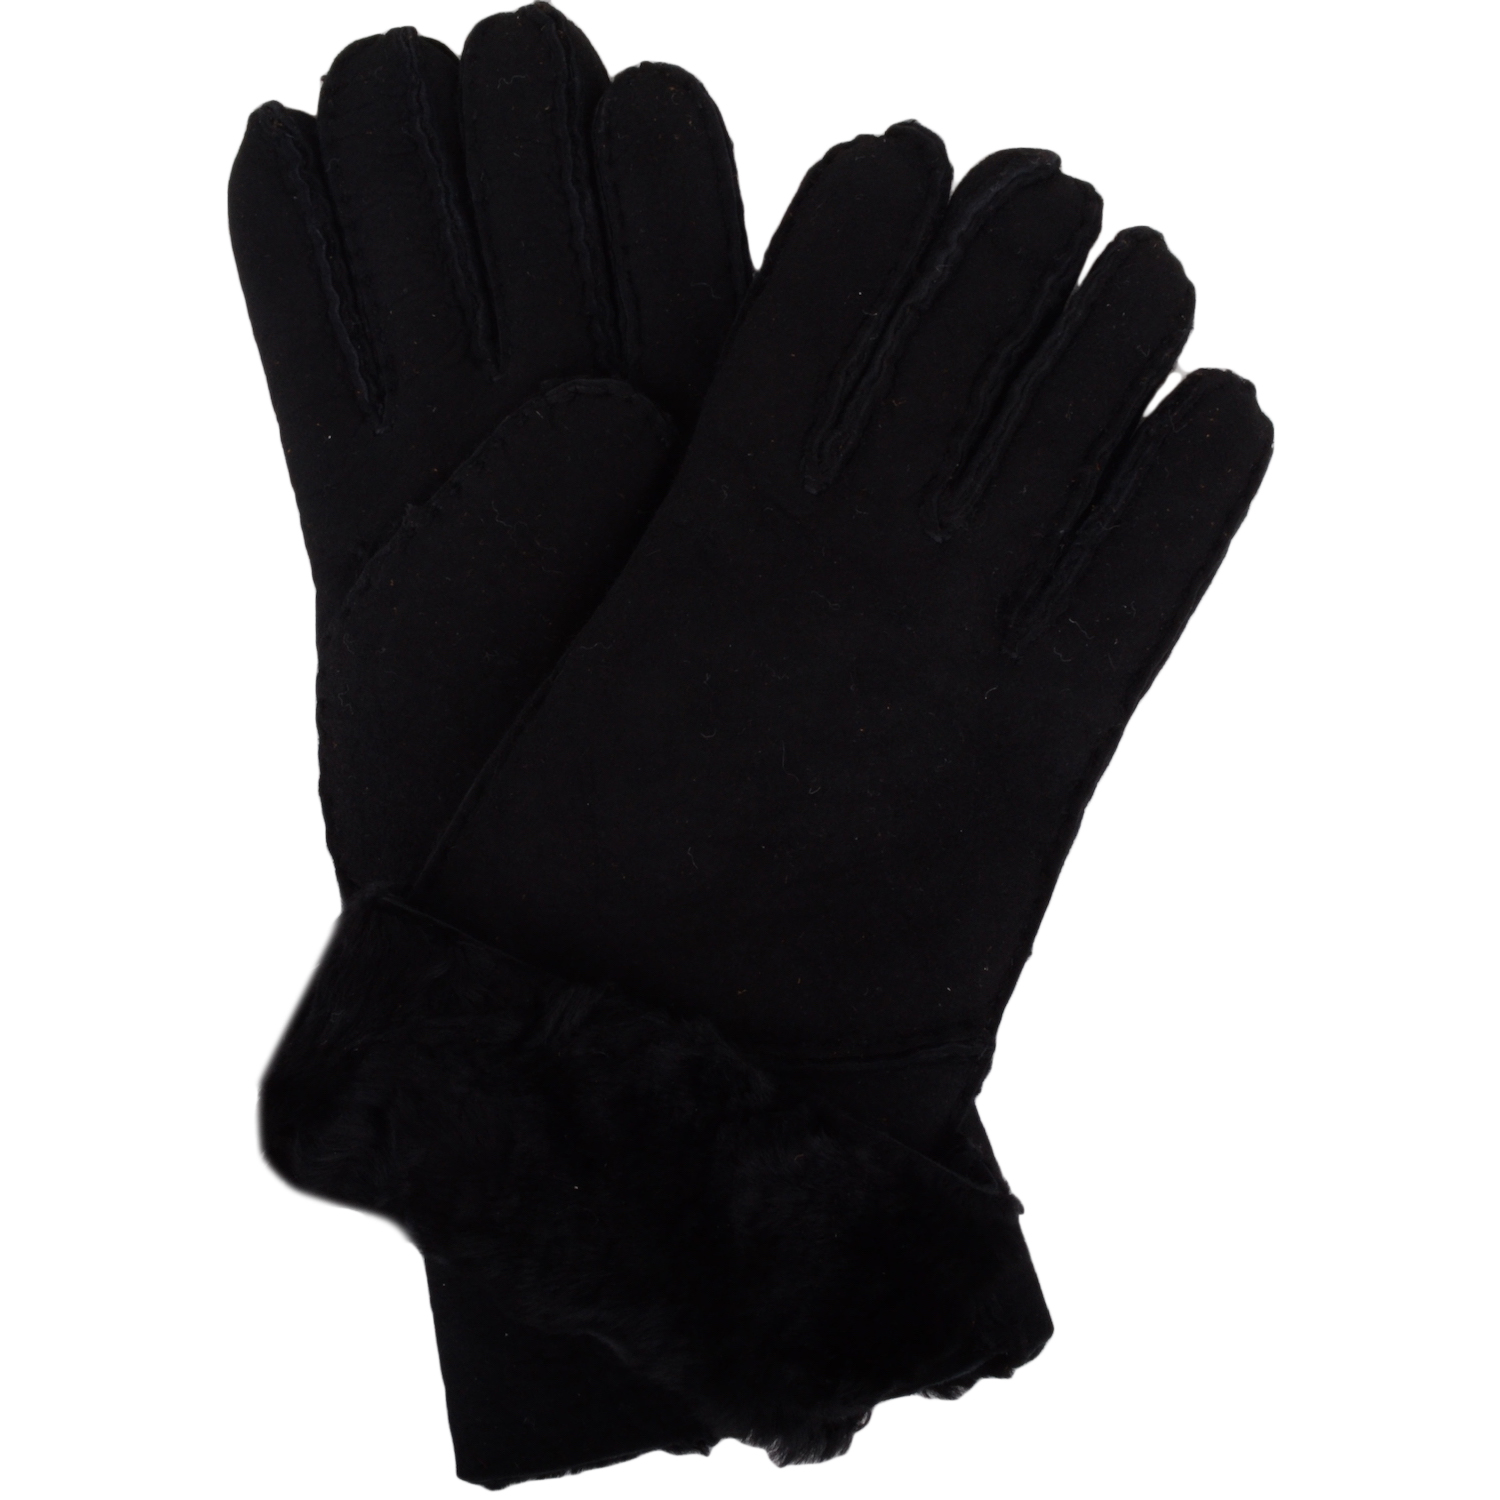 Vicky - Full Sheepskin Glove Long Fold Back Cuff - Black